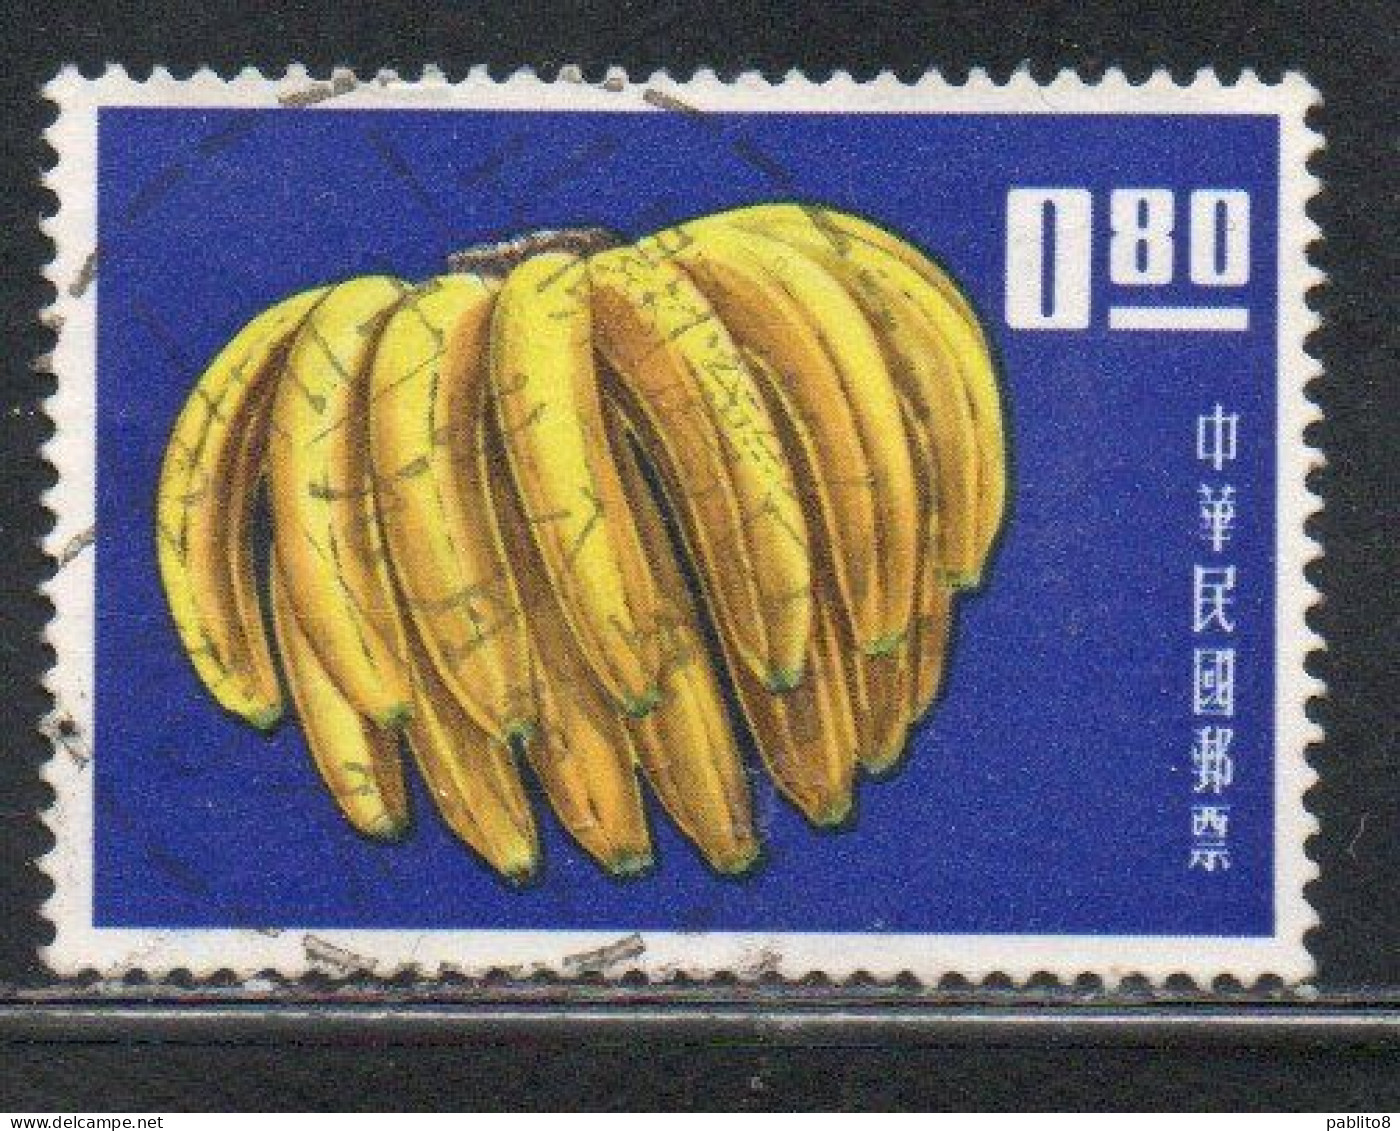 CHINA REPUBLIC CINA TAIWAN FORMOSA 1964 FRUITS BANANAS BANANA FRUIT 80c USED USATO OBLITERE' - Usados